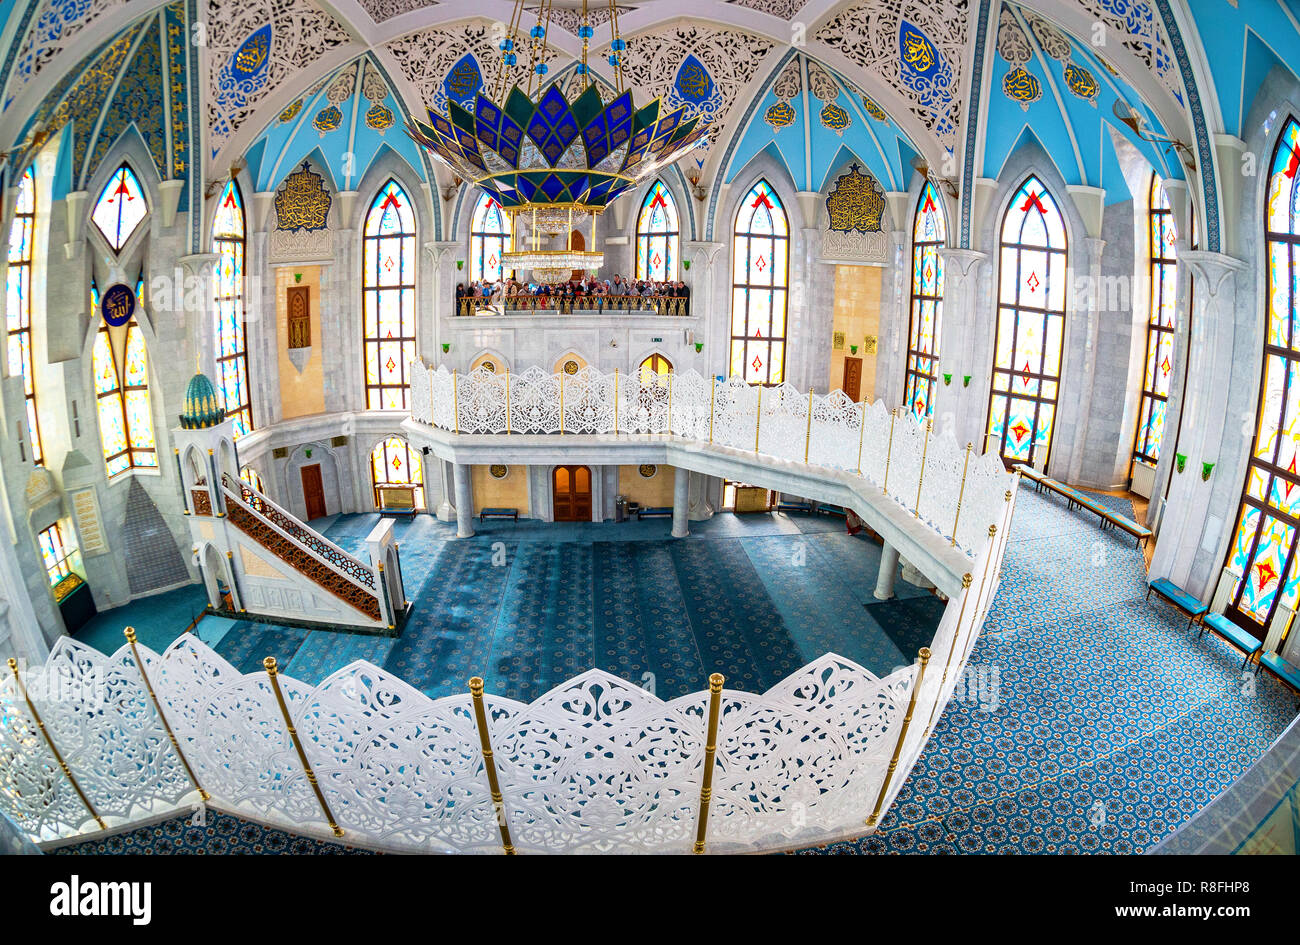 Kasan, Tatarstan, Russland - 10. Juni 2018: das Innere des berühmten Kul Sharif Moschee in Kasan Kreml Stockfoto